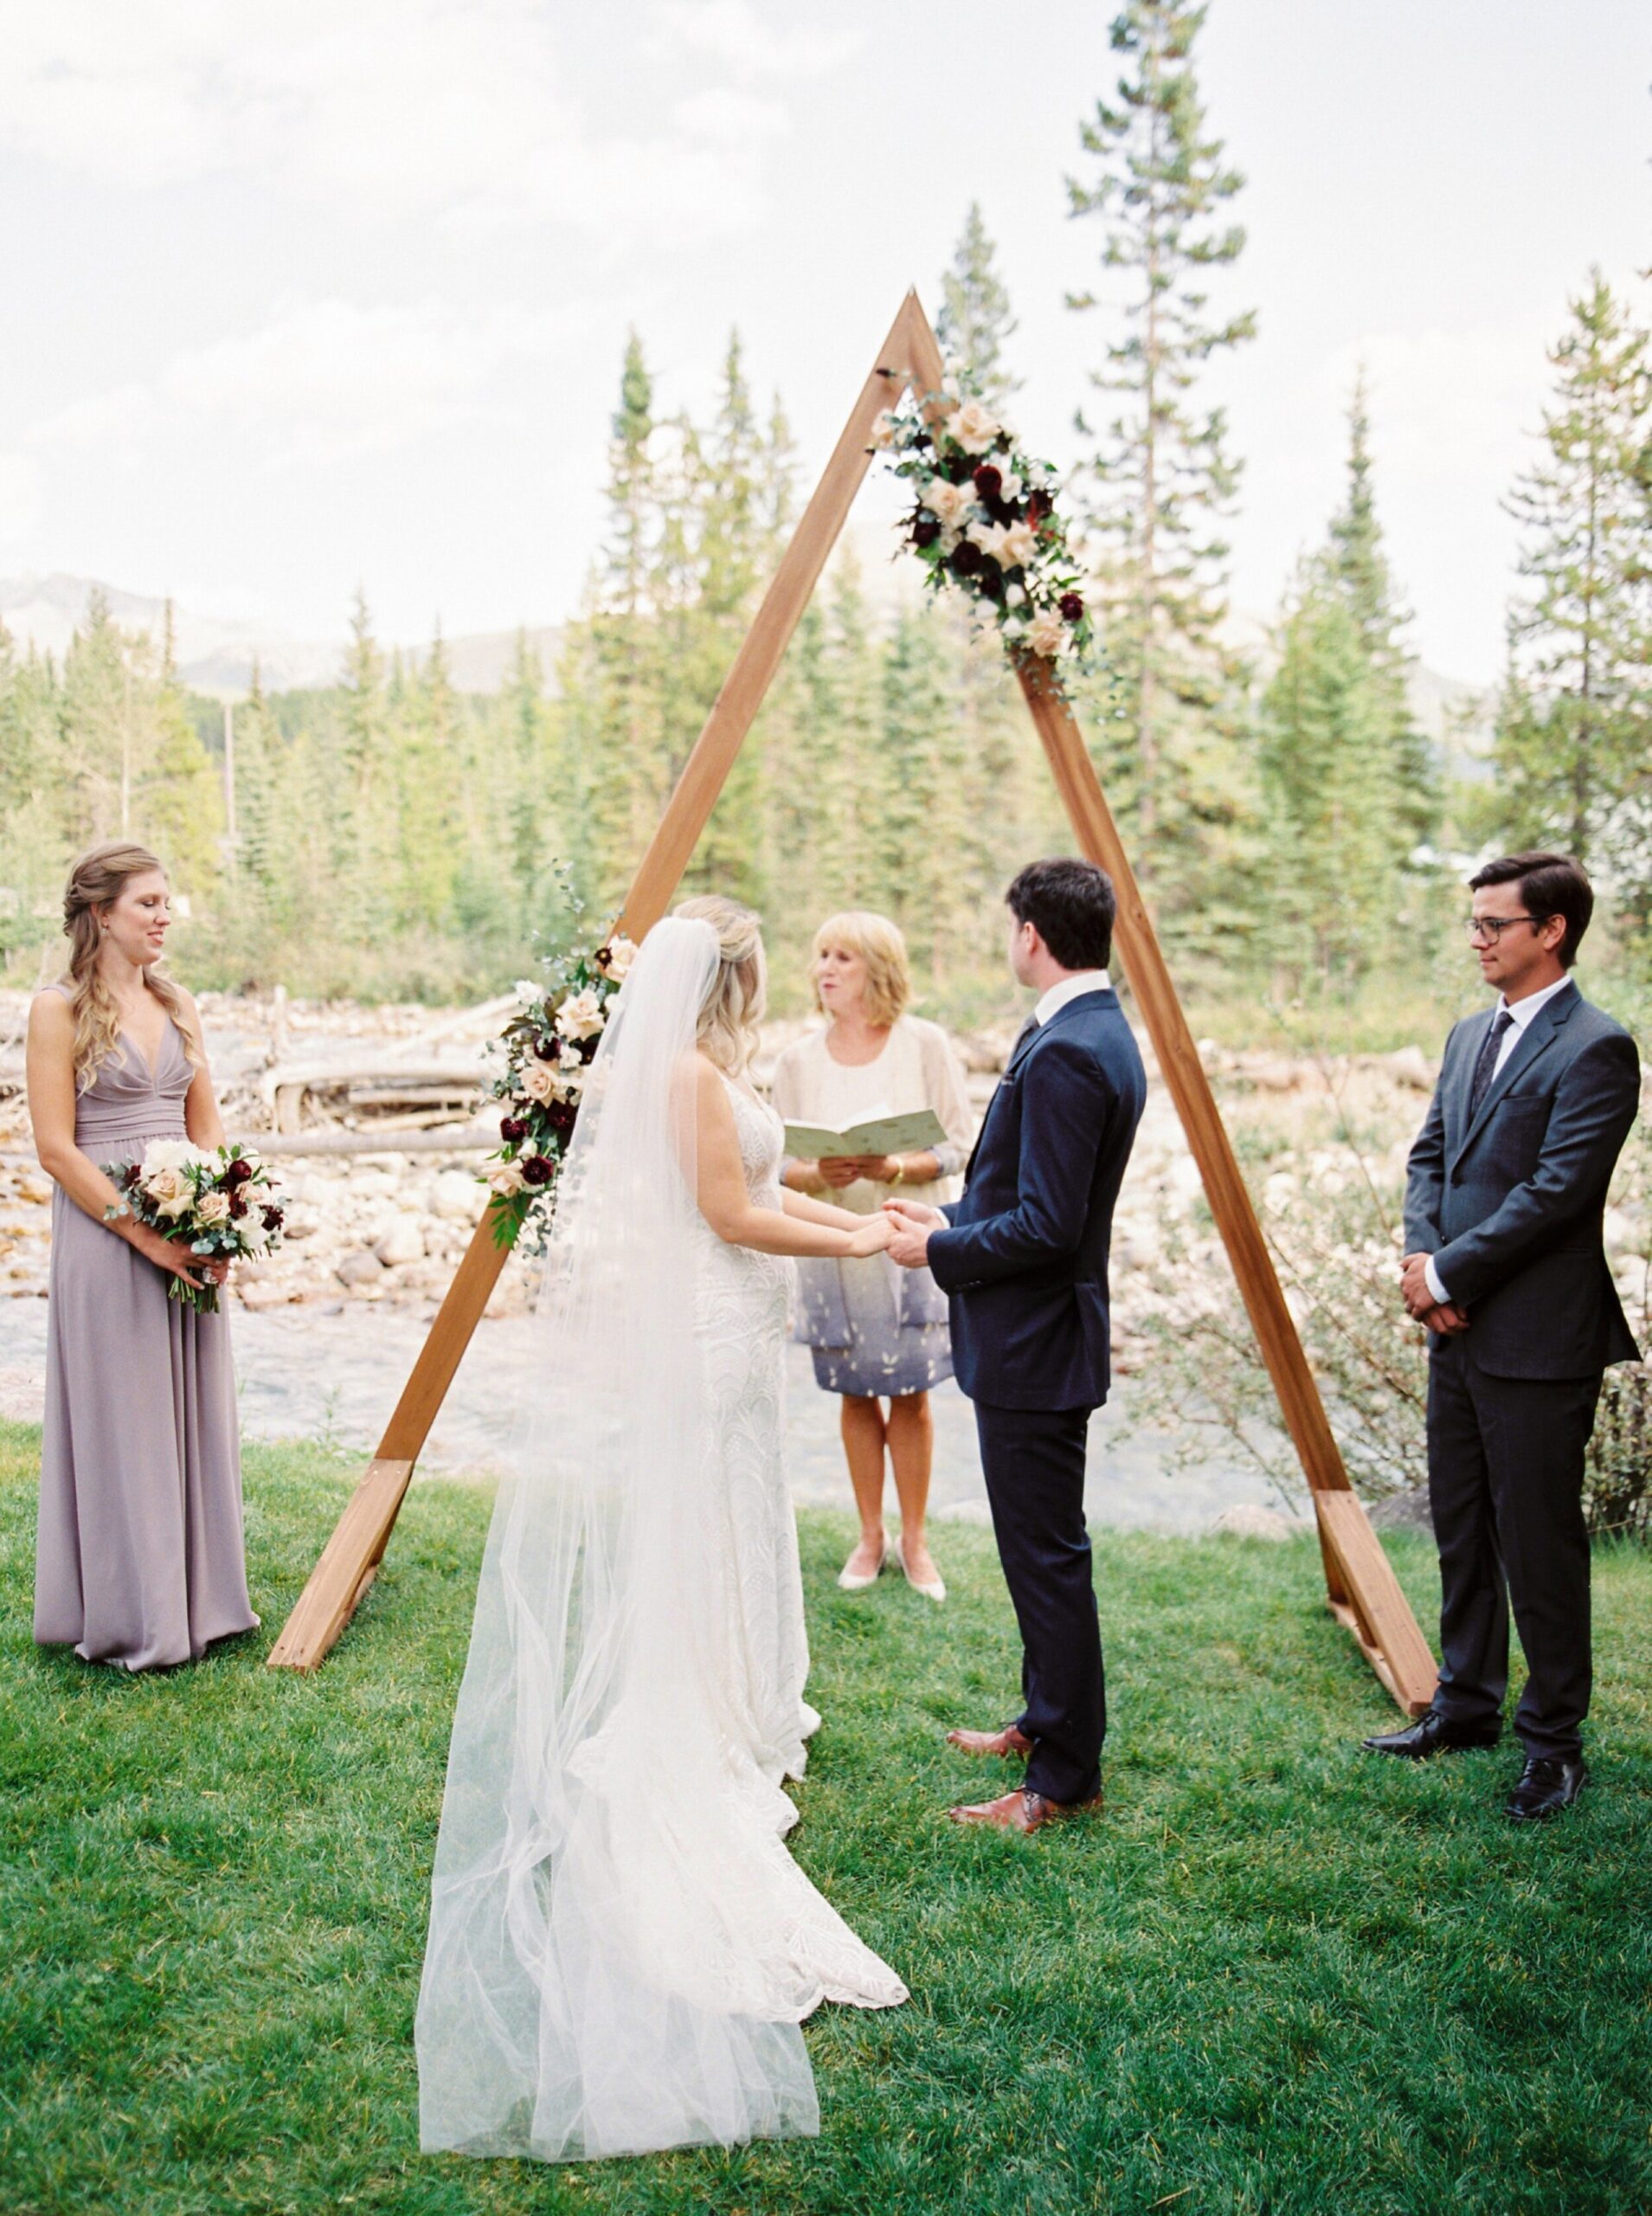  Lake Louise wedding photographers | Post Hotel Inn | Intimate mini wedding ceremony 